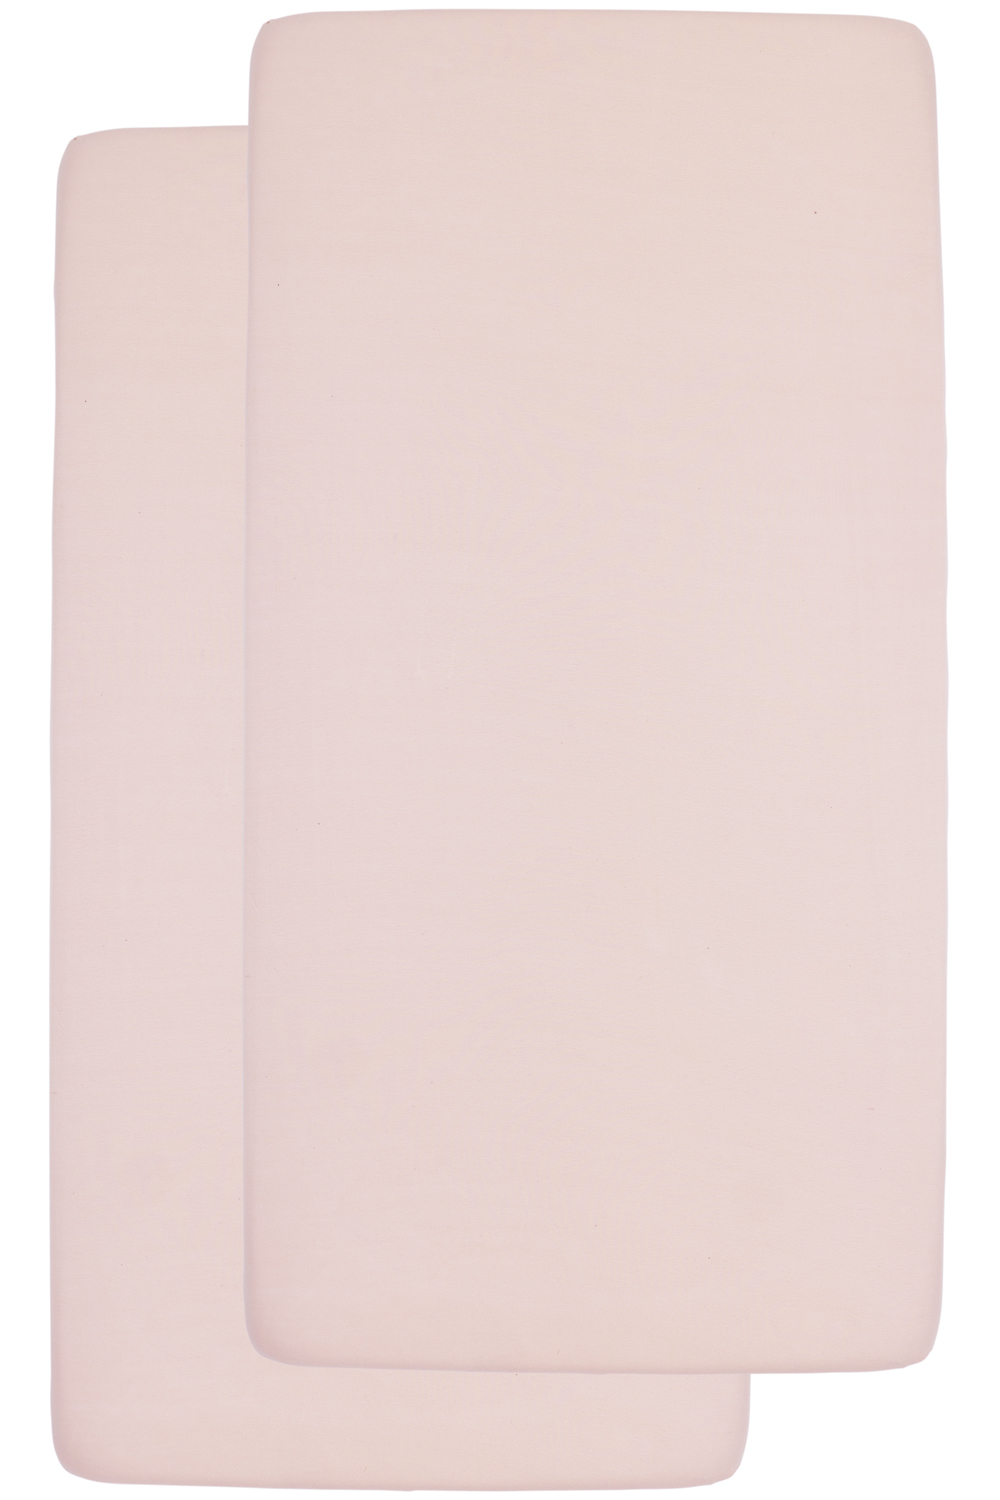 Hoeslaken ledikant 2-pack Uni - soft pink - 60x120cm